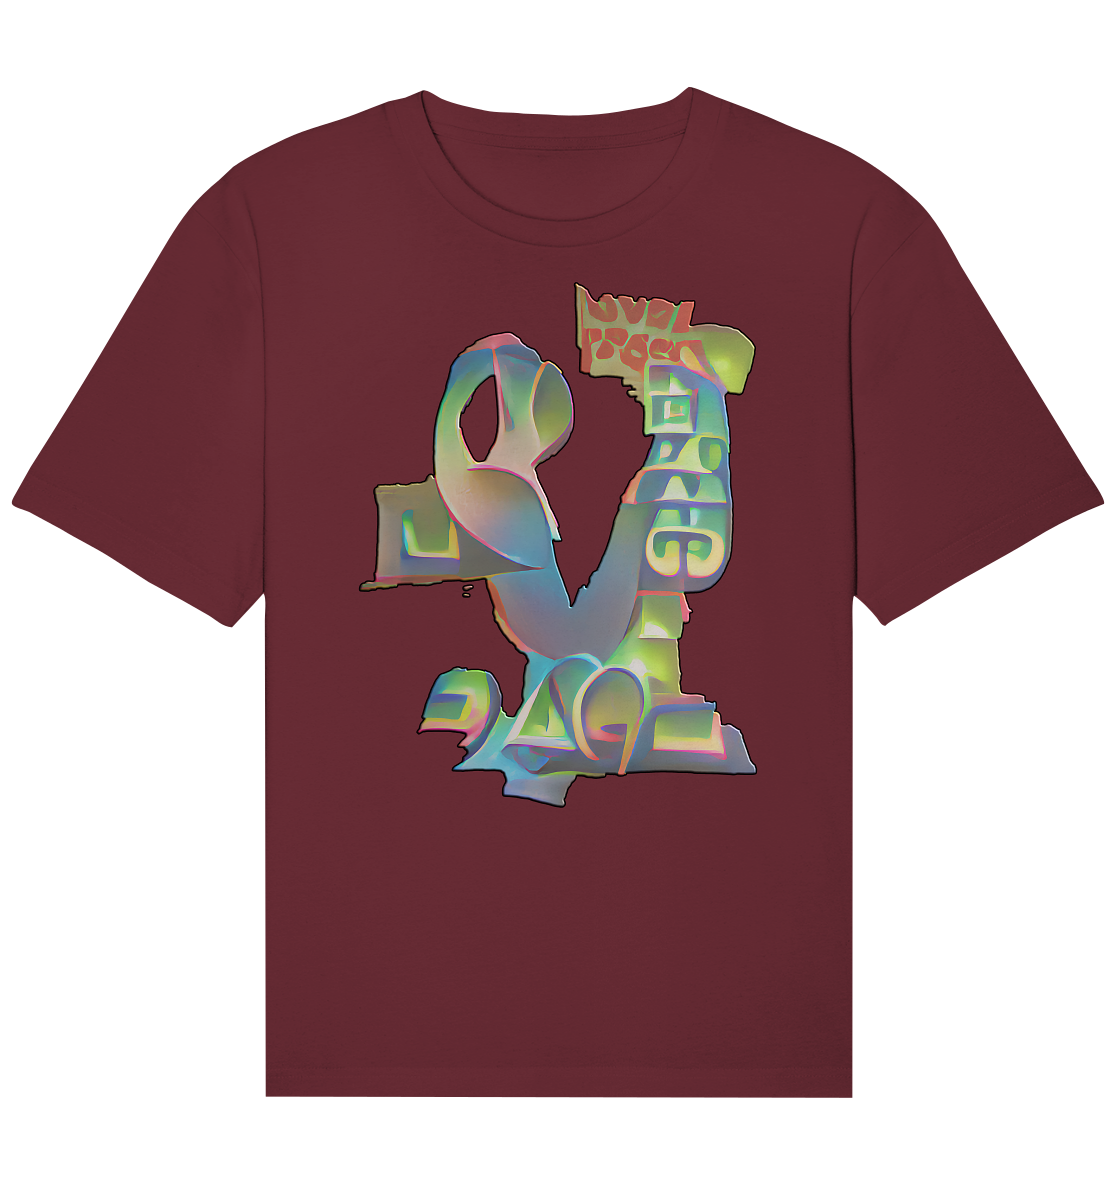 Peace & Love - Organic Relaxed Shirt